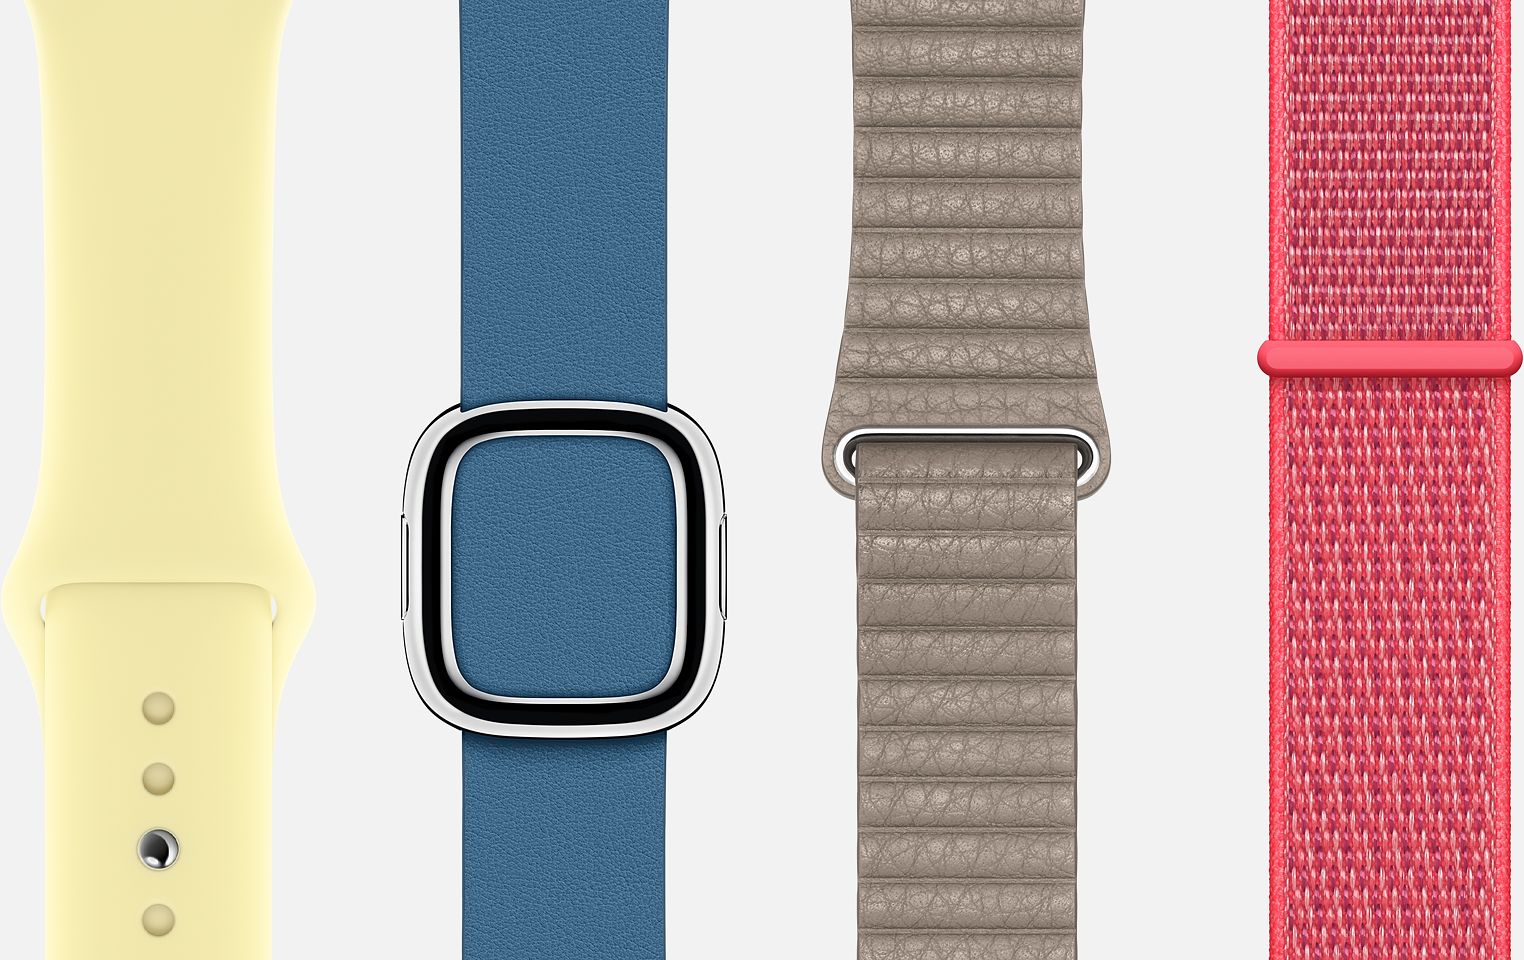 ｢Apple Watch｣用バンドの一部カラーモデルが在庫切れに − 春の新作コレクション投入に向けた在庫調整か